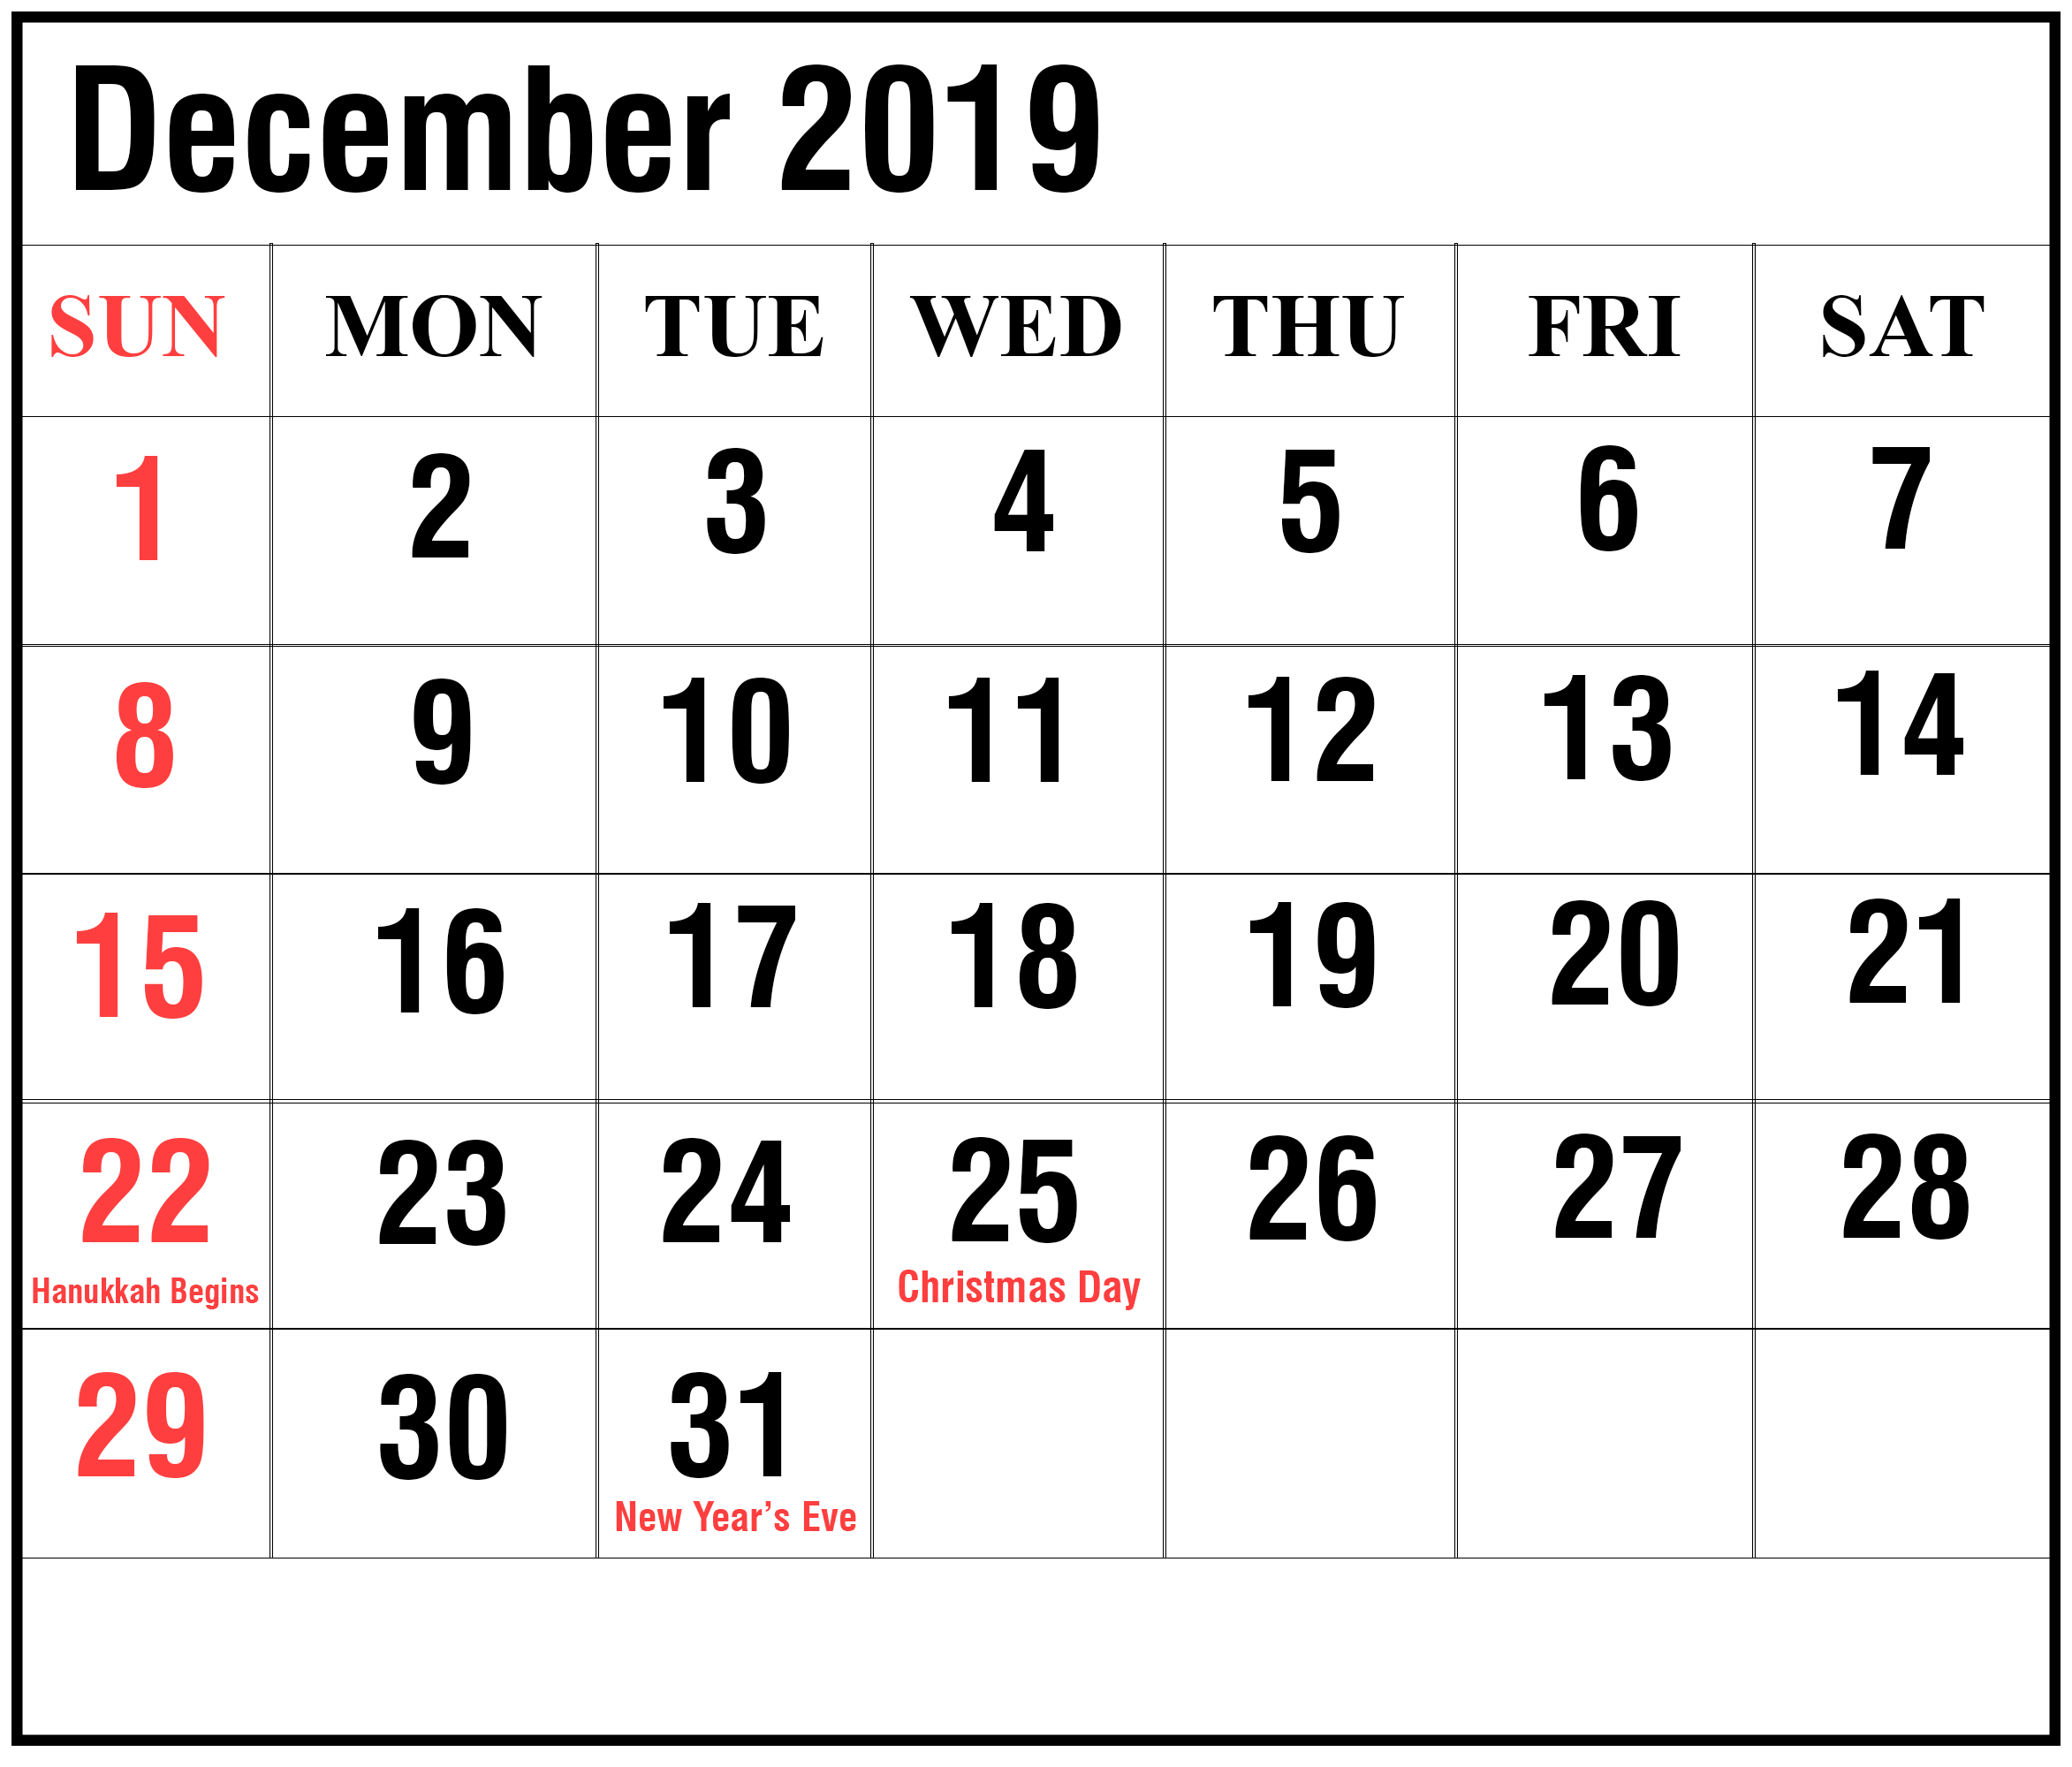 december-2019-calendar-with-holidays-for-events-managemnet-free